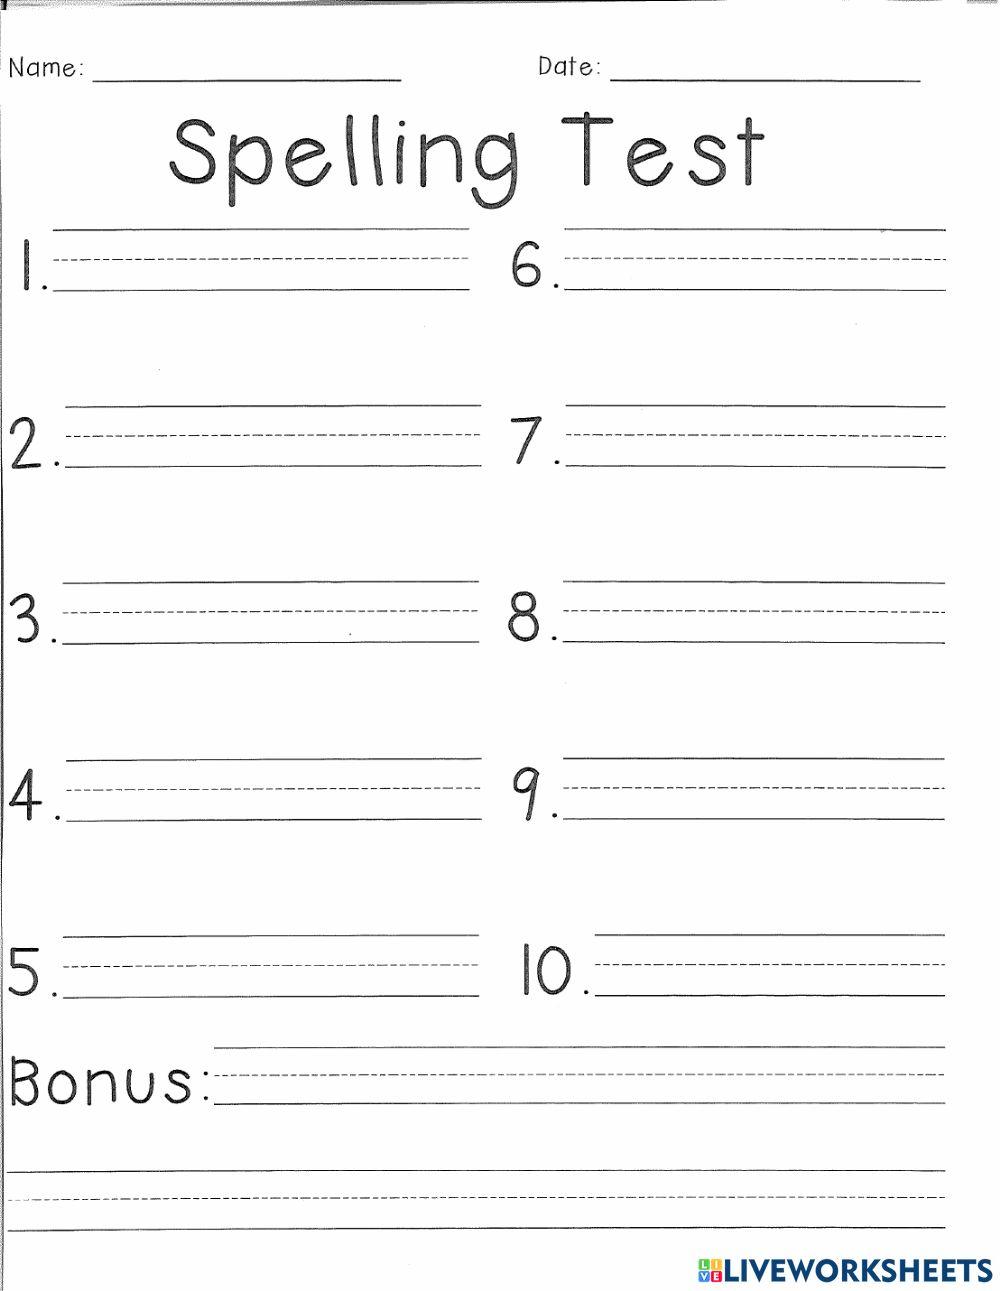 Spelling List - 16